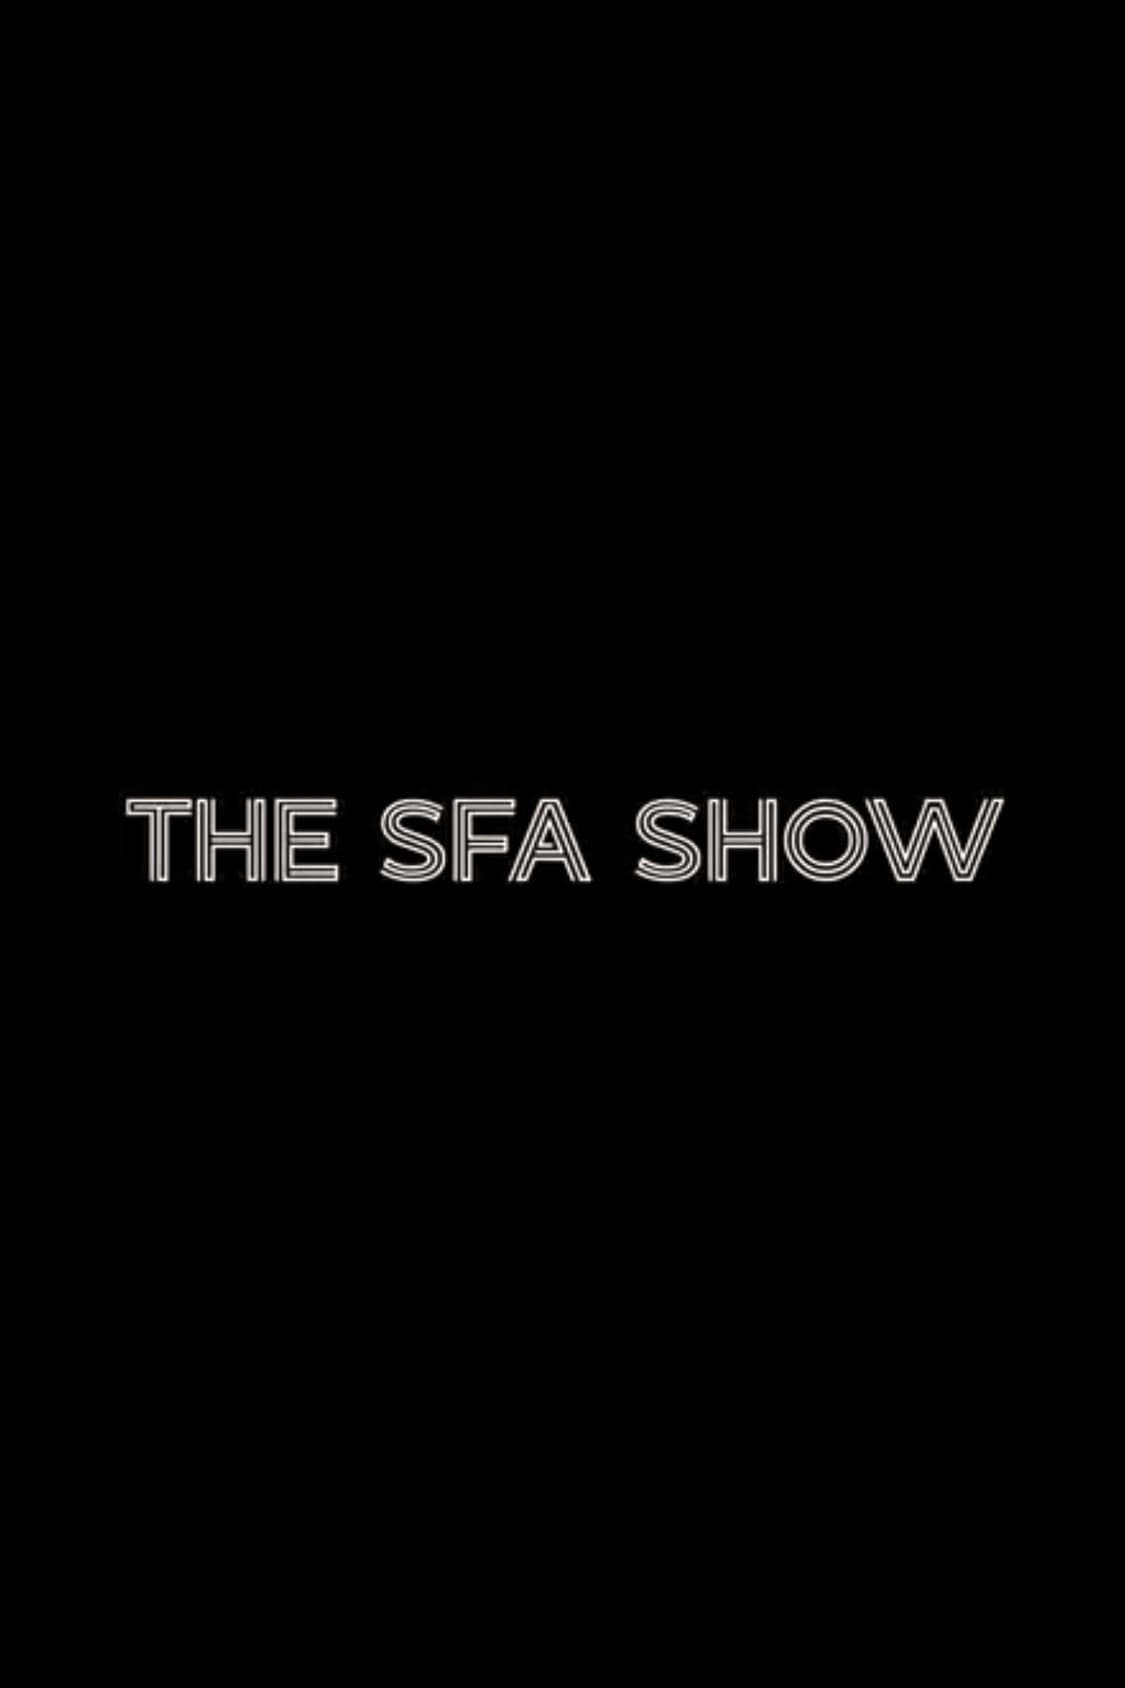 The SFA Show